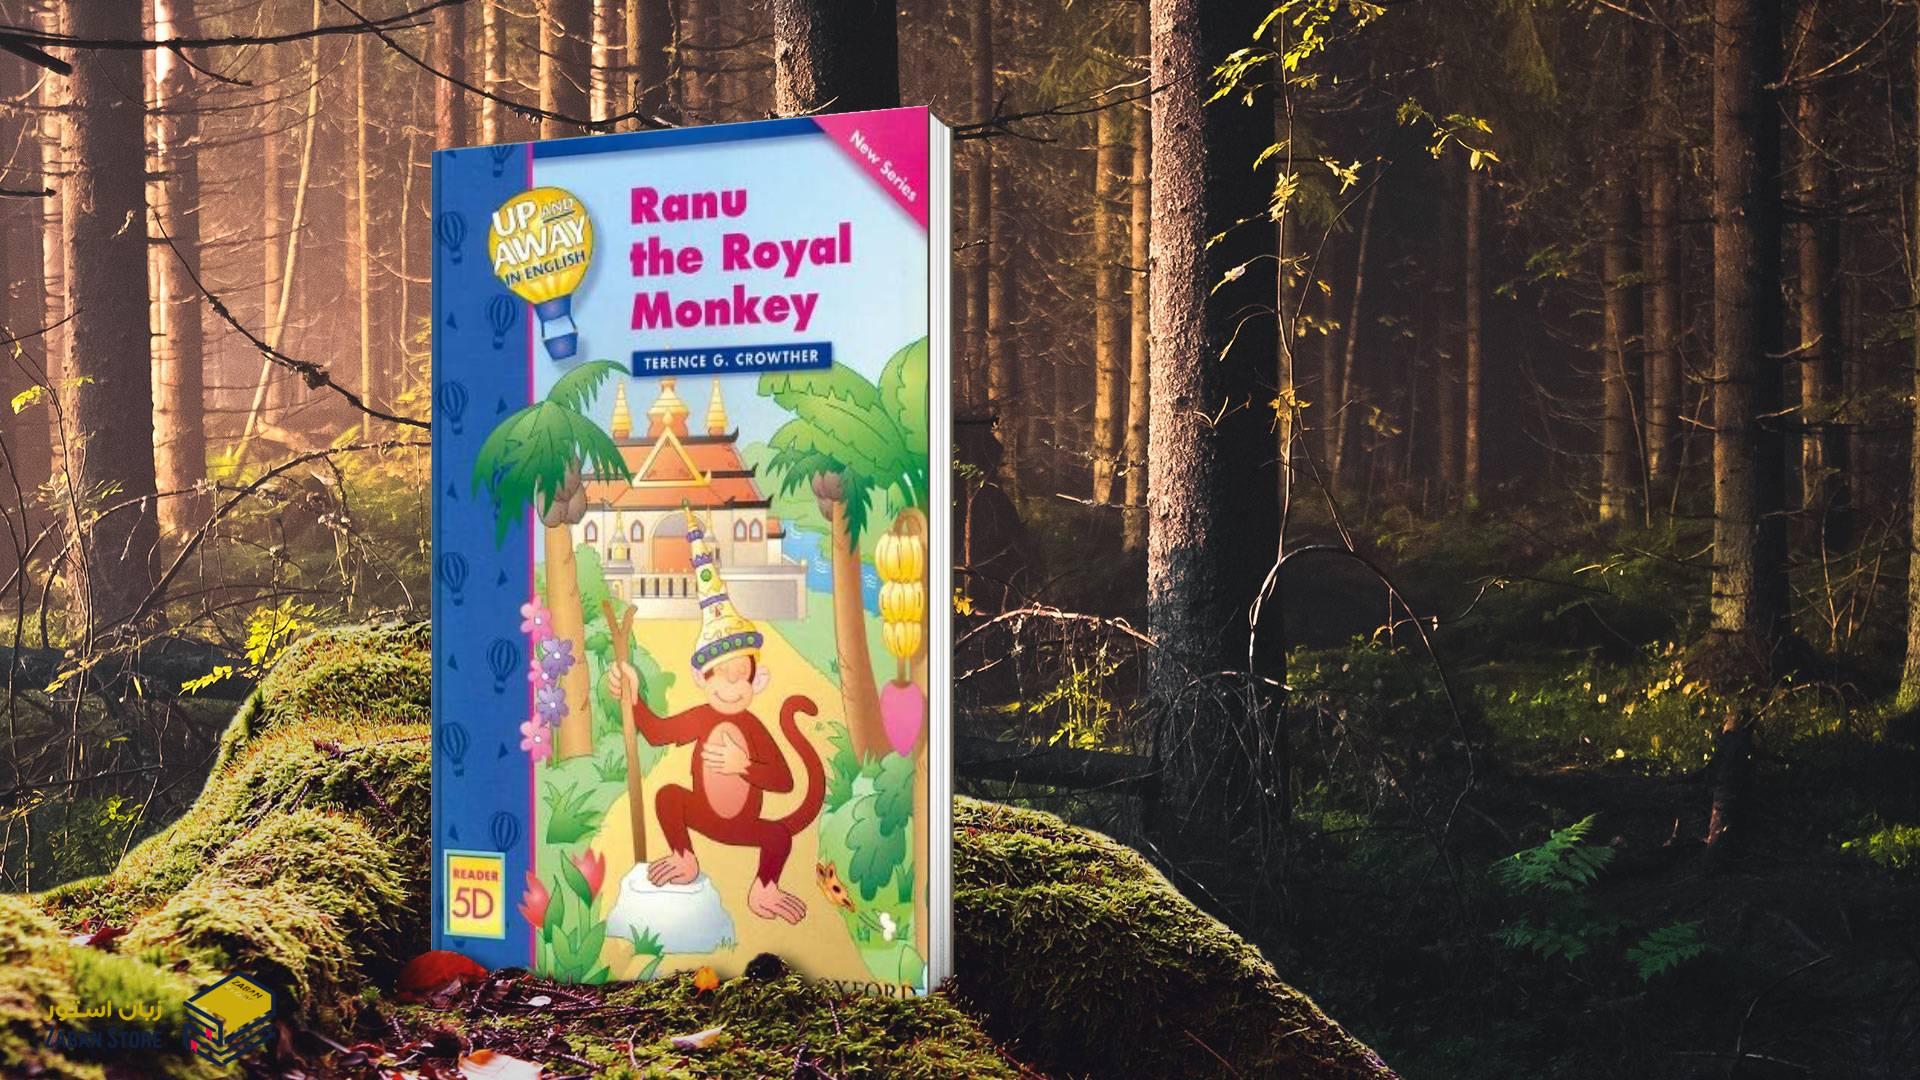 خرید کتاب زبان | کتاب زبان اصلی | Up and Away in English Reader 5D Ranu the Royal Monkey | داستان آپ اند اوی این انگلیش پنج رانو میمون سلطنتی